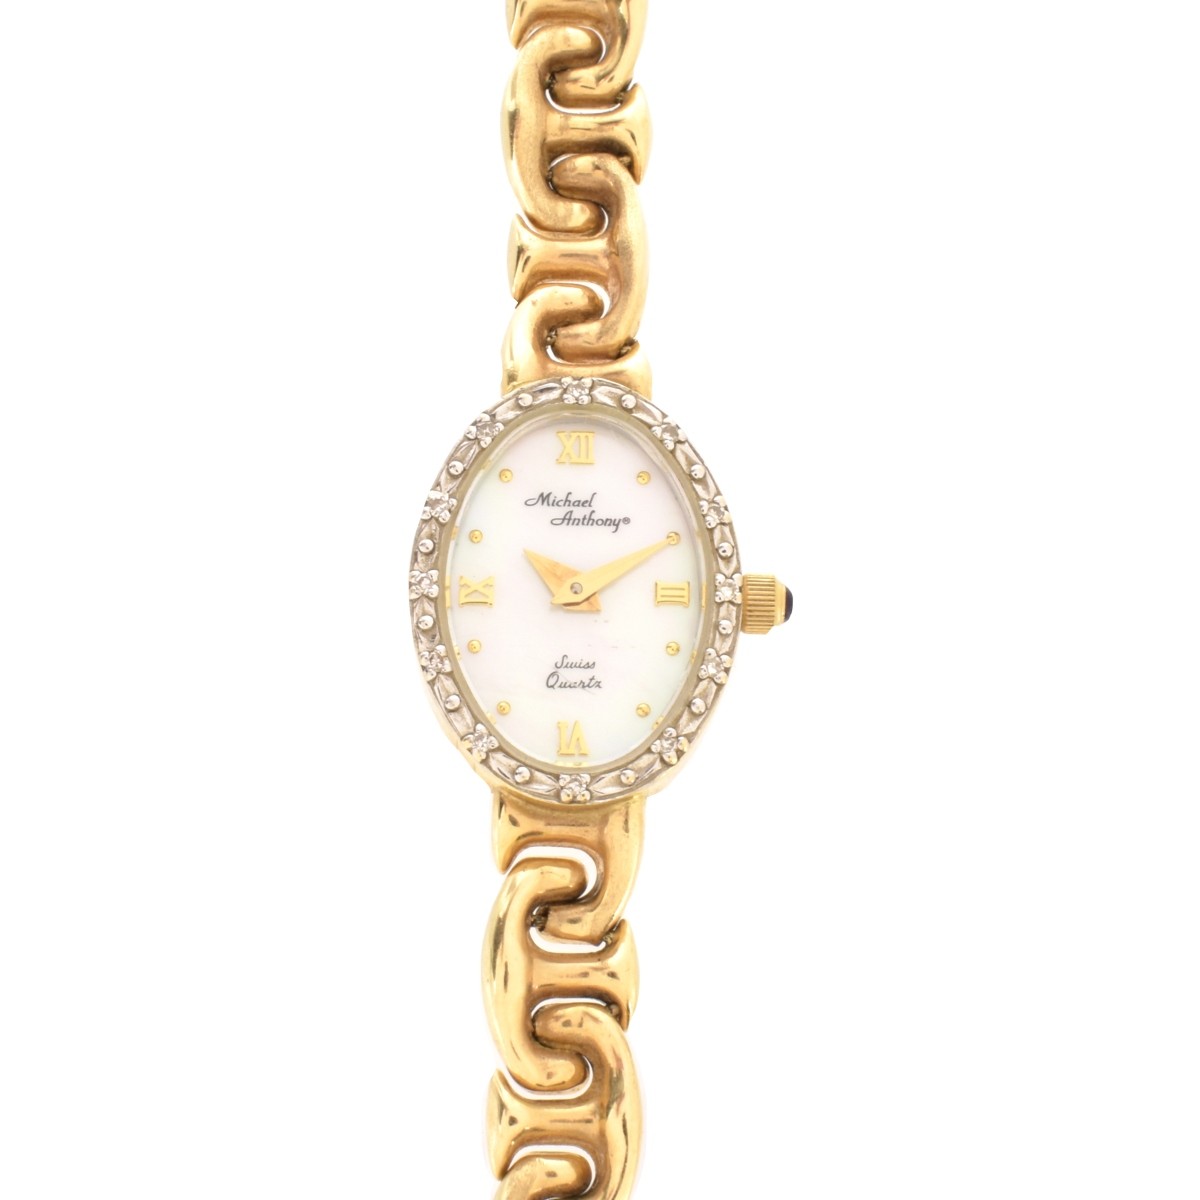 Lady's 14K Gold Watch